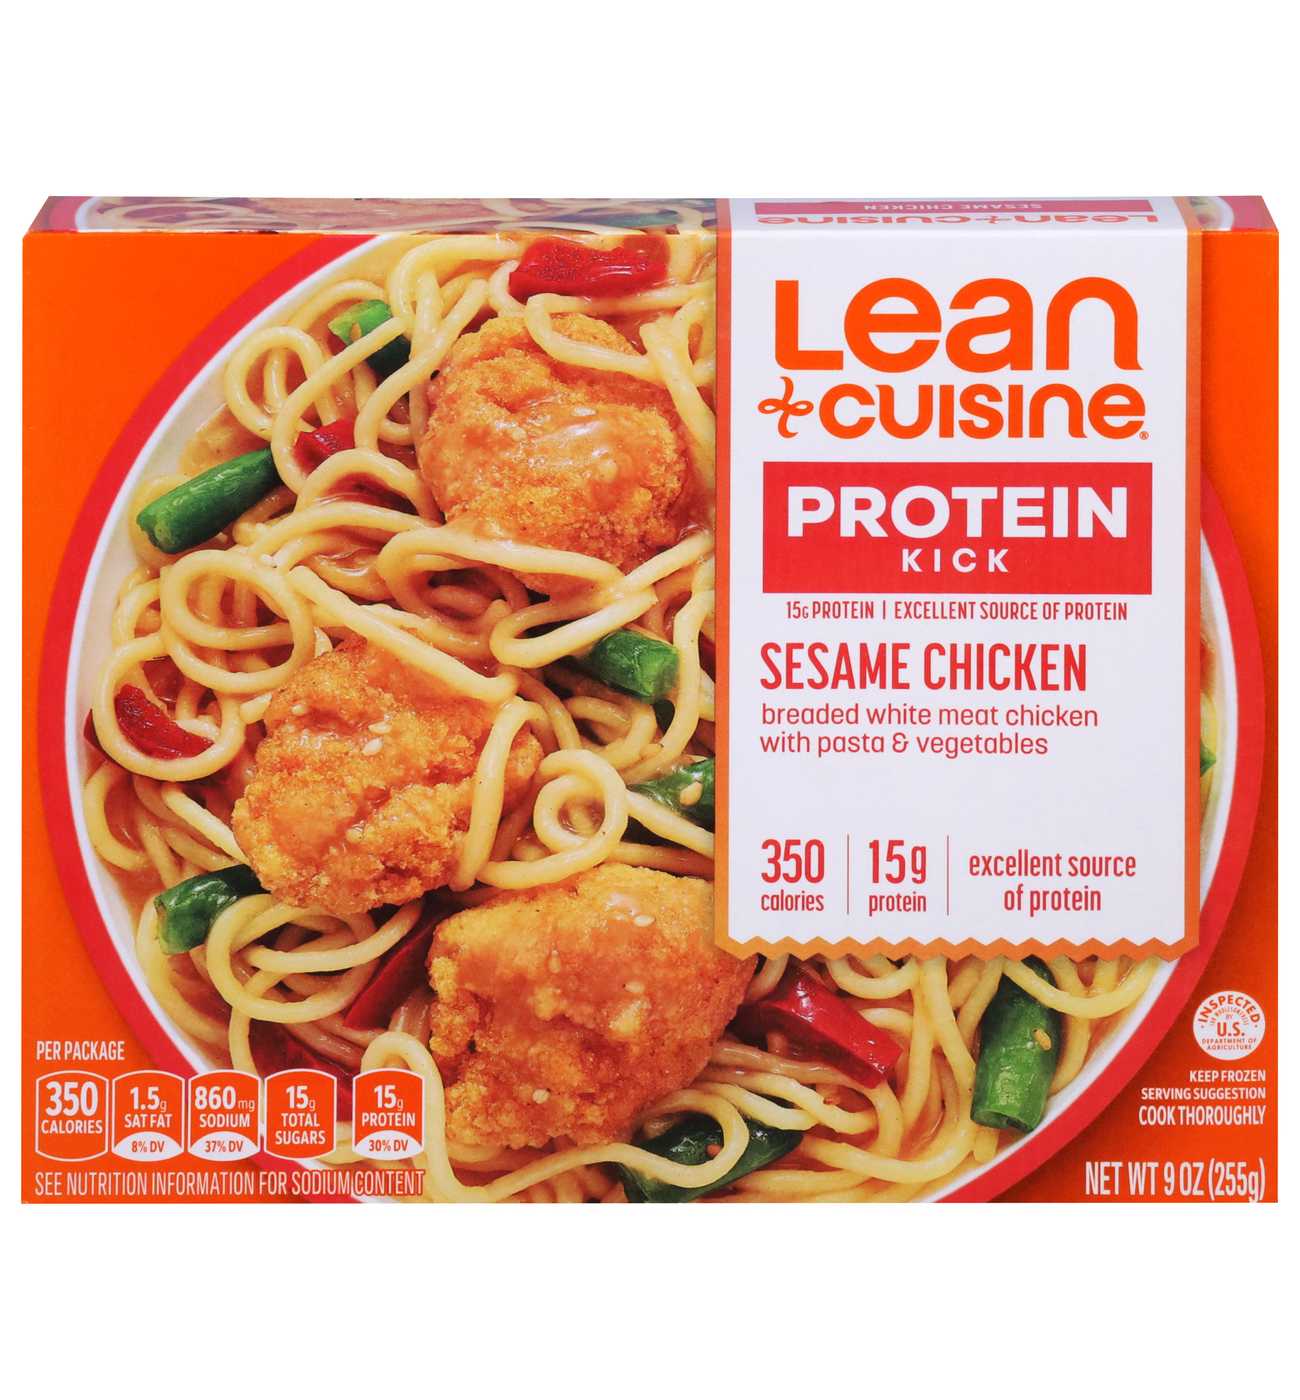 Lean Cuisine 15g Protein Sesame Chicken Frozen Meal; image 1 of 6